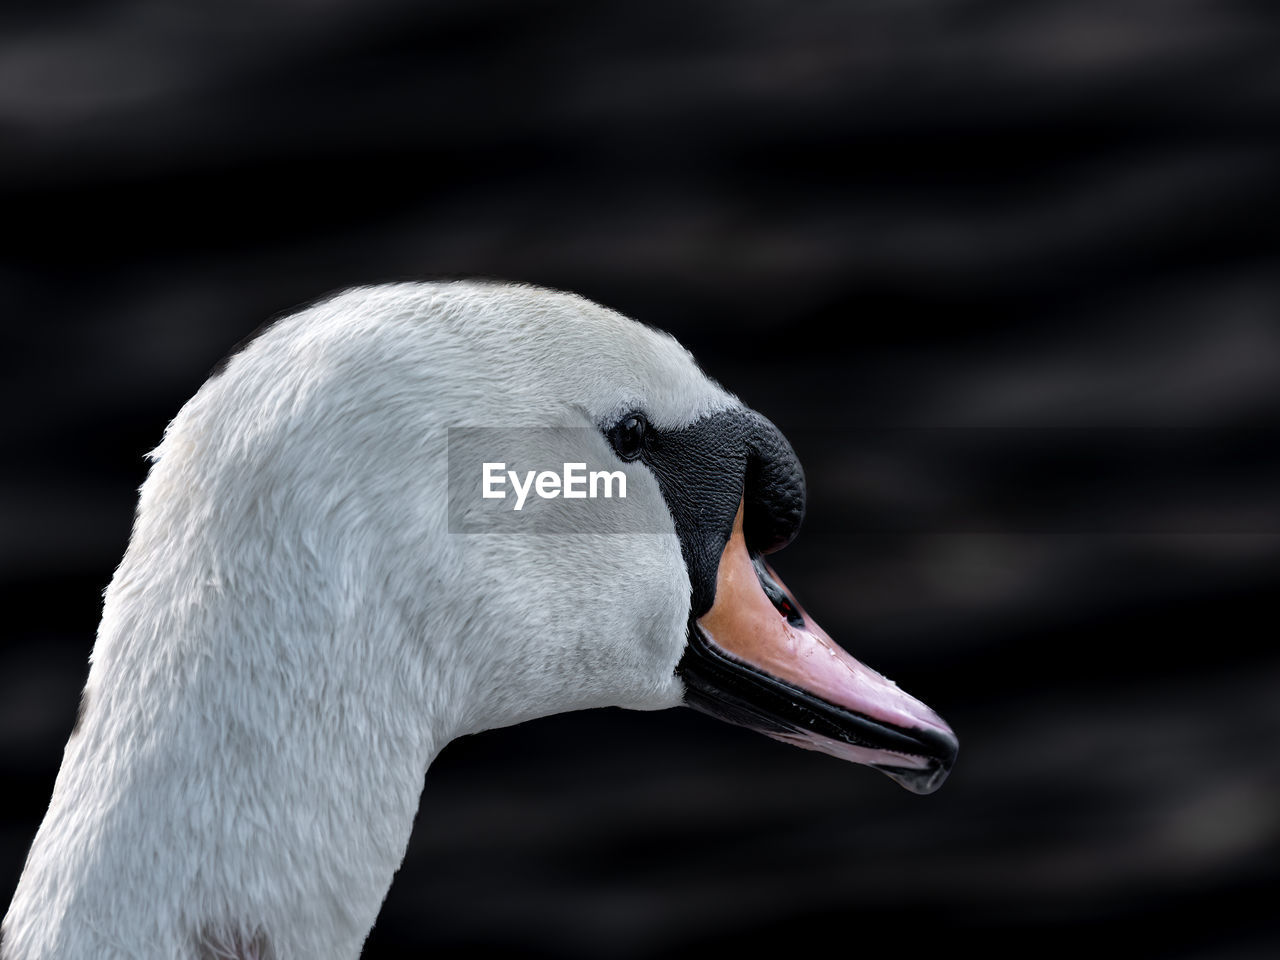 close-up of swan